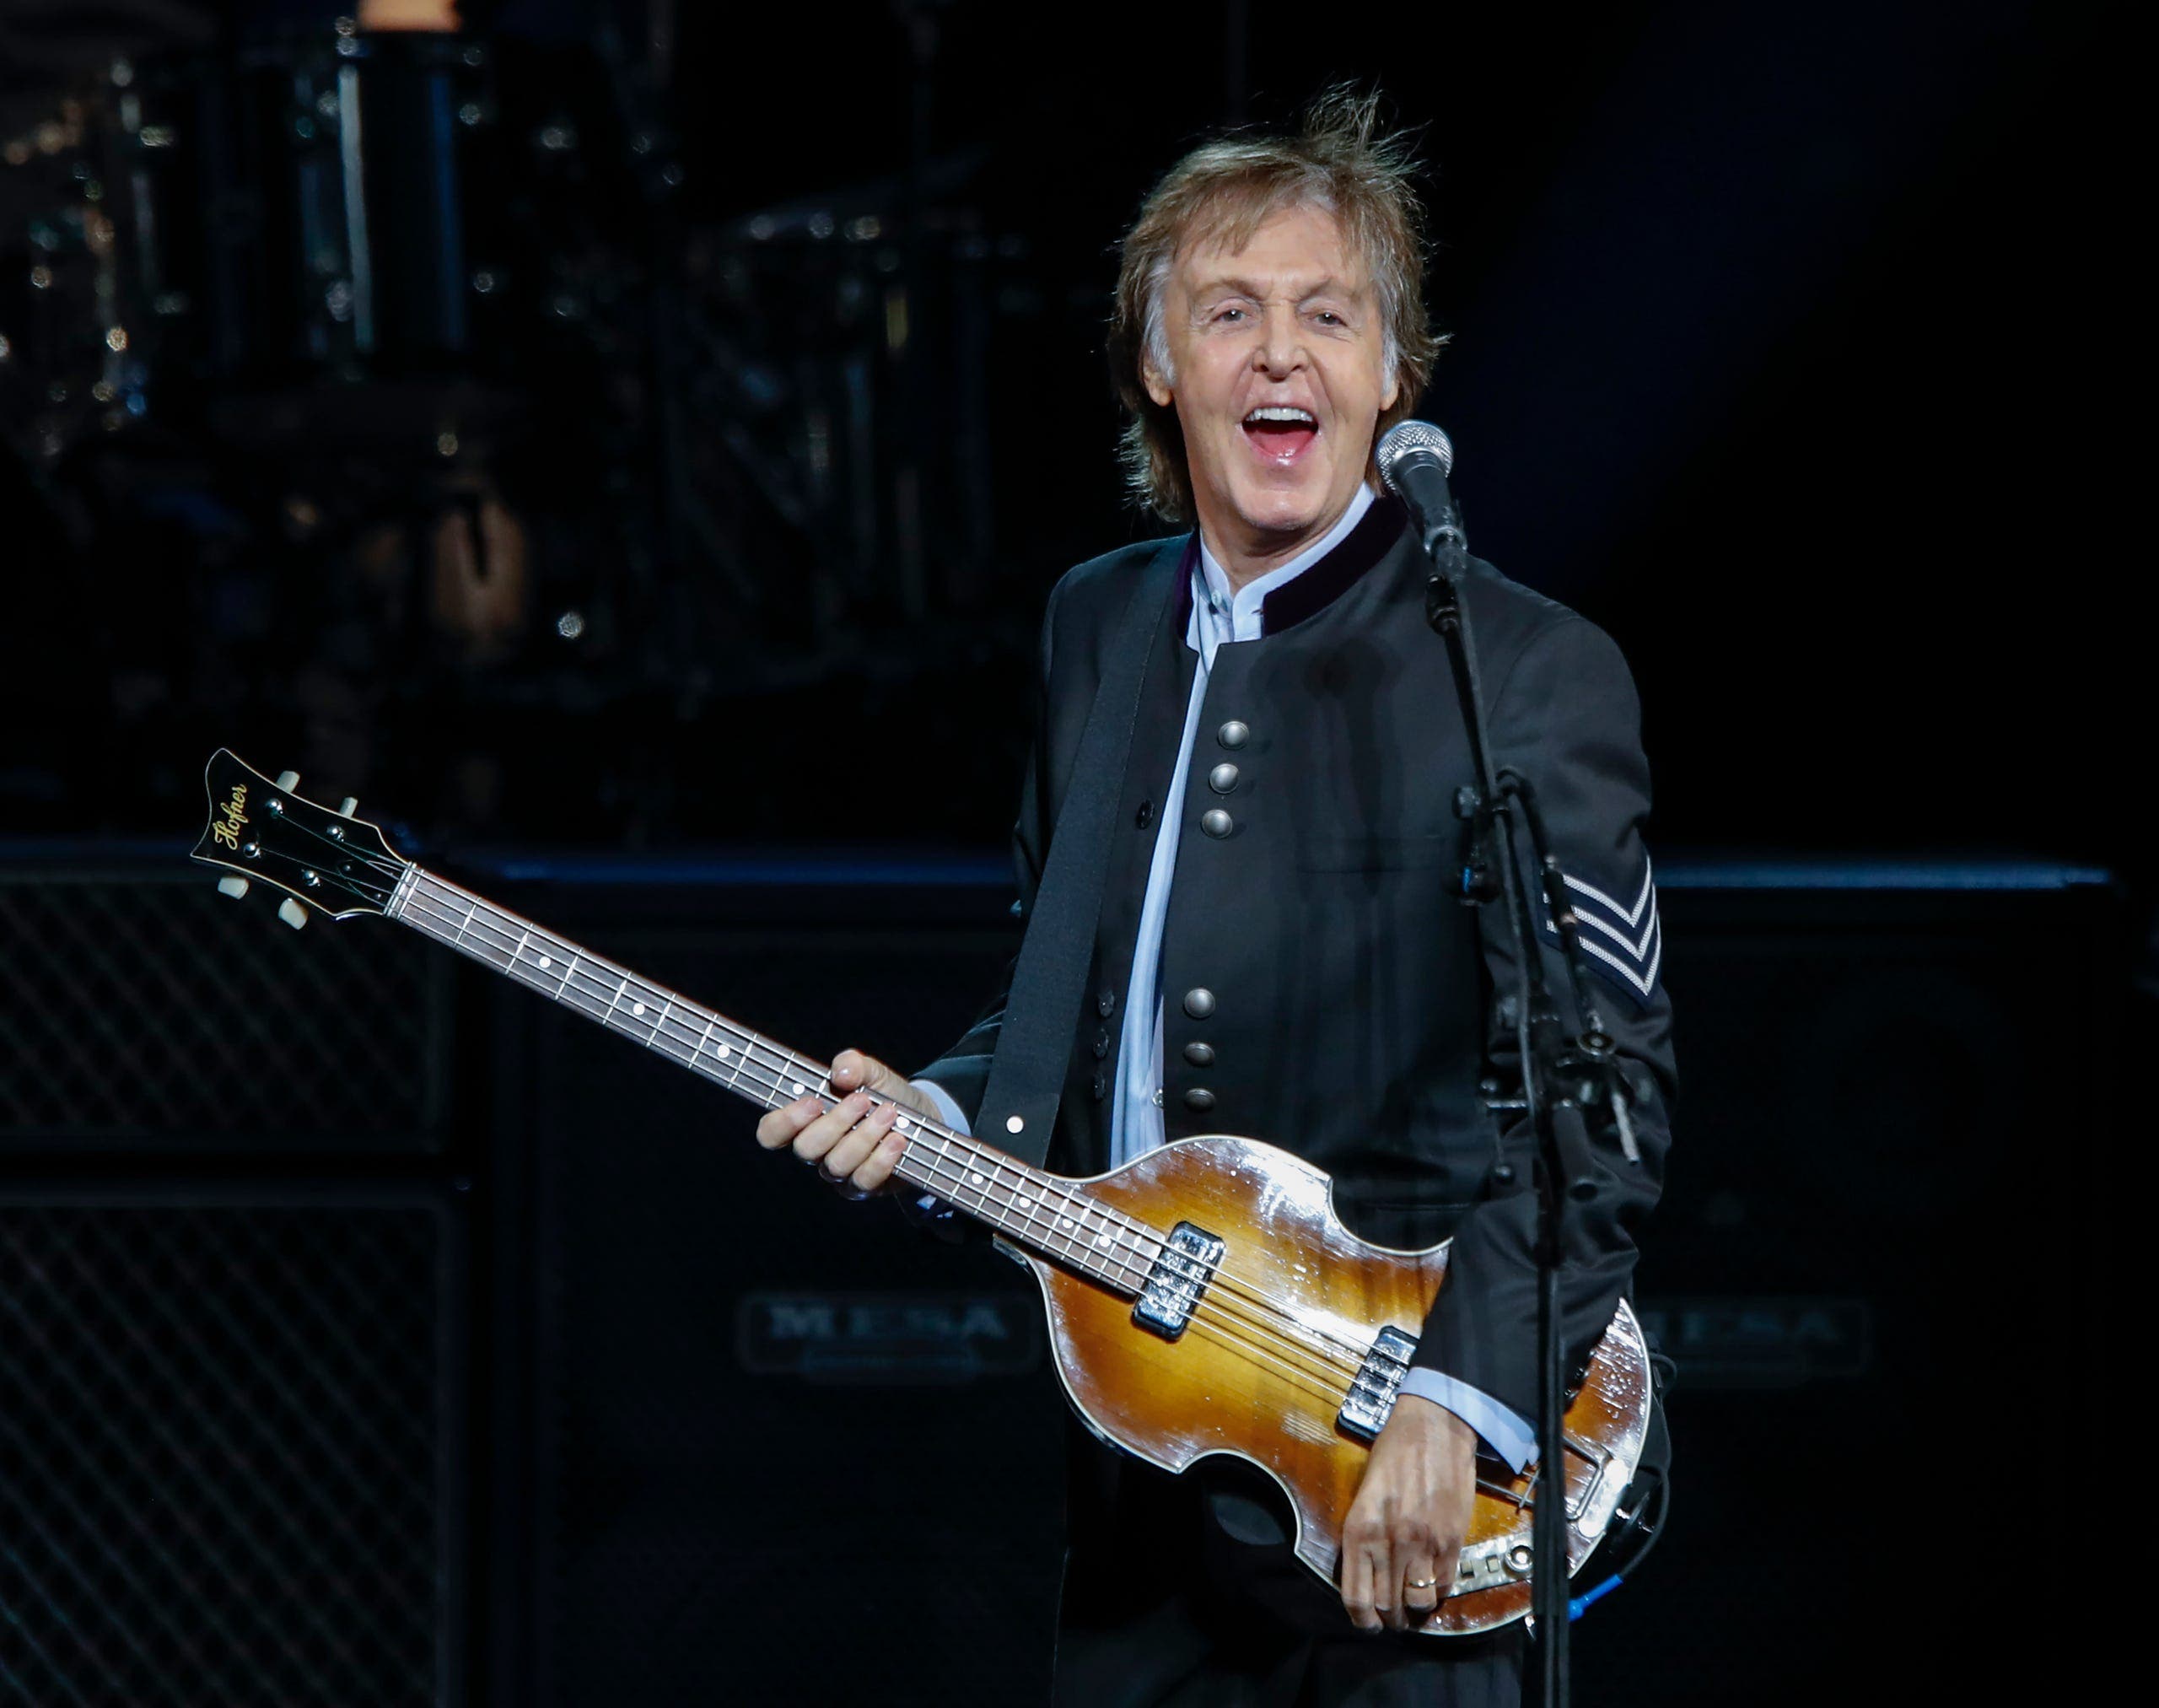 John Lennon instigó la ruptura de los Beatles, según Paul McCartney